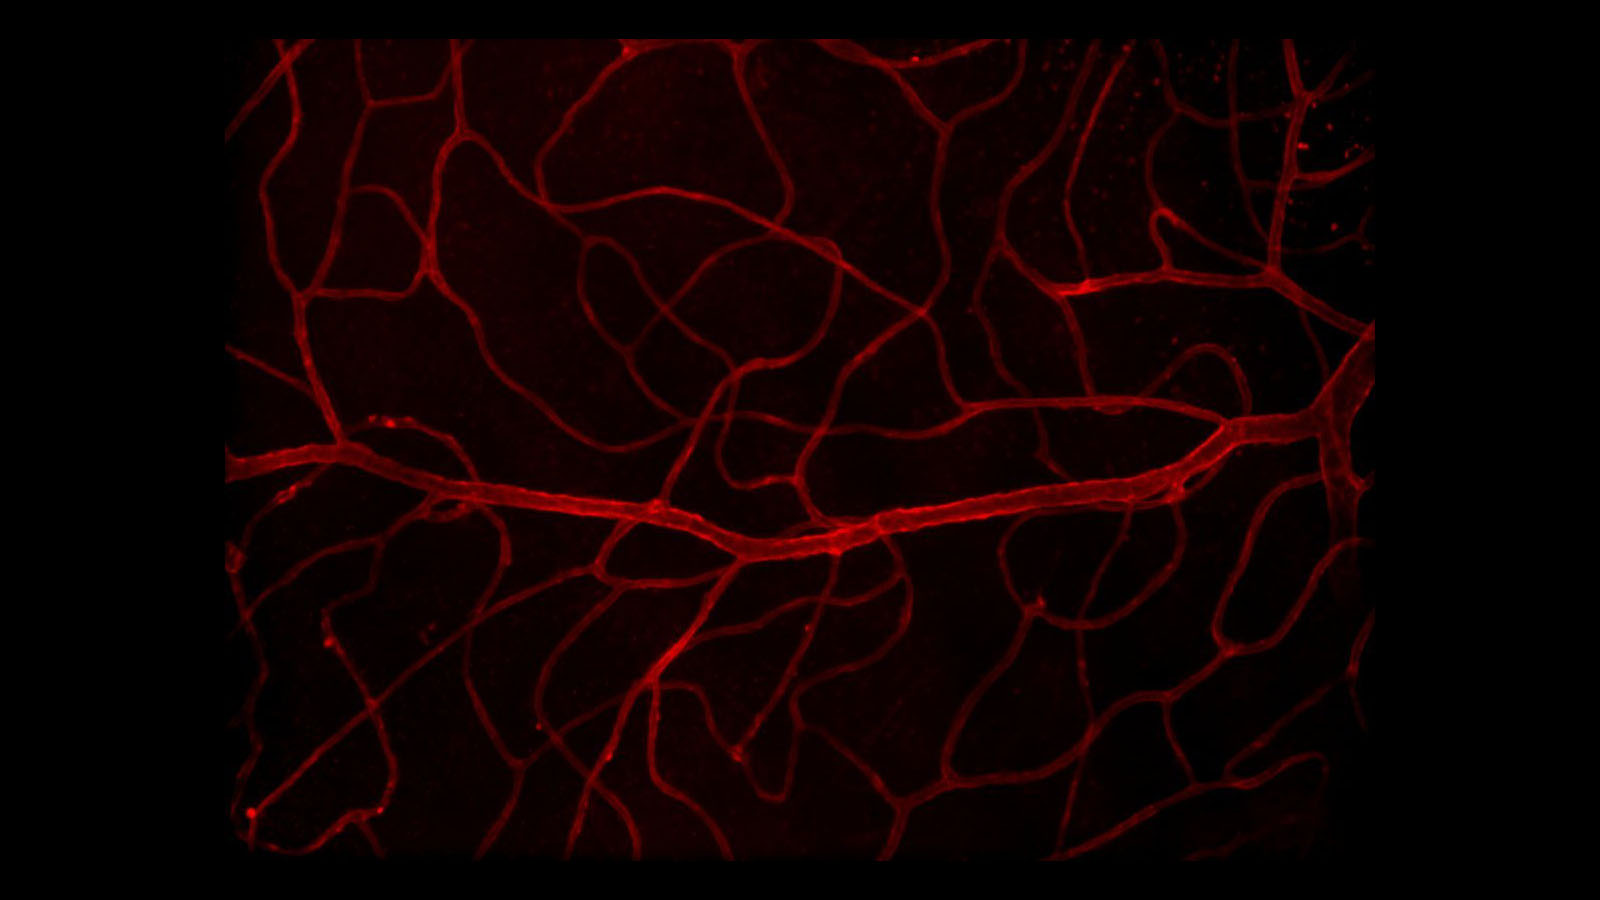 3D microscopy image of vasculature in human retina courtesy of Dr. Angela Kruse of the Spraggins Lab at Vanderbilt University